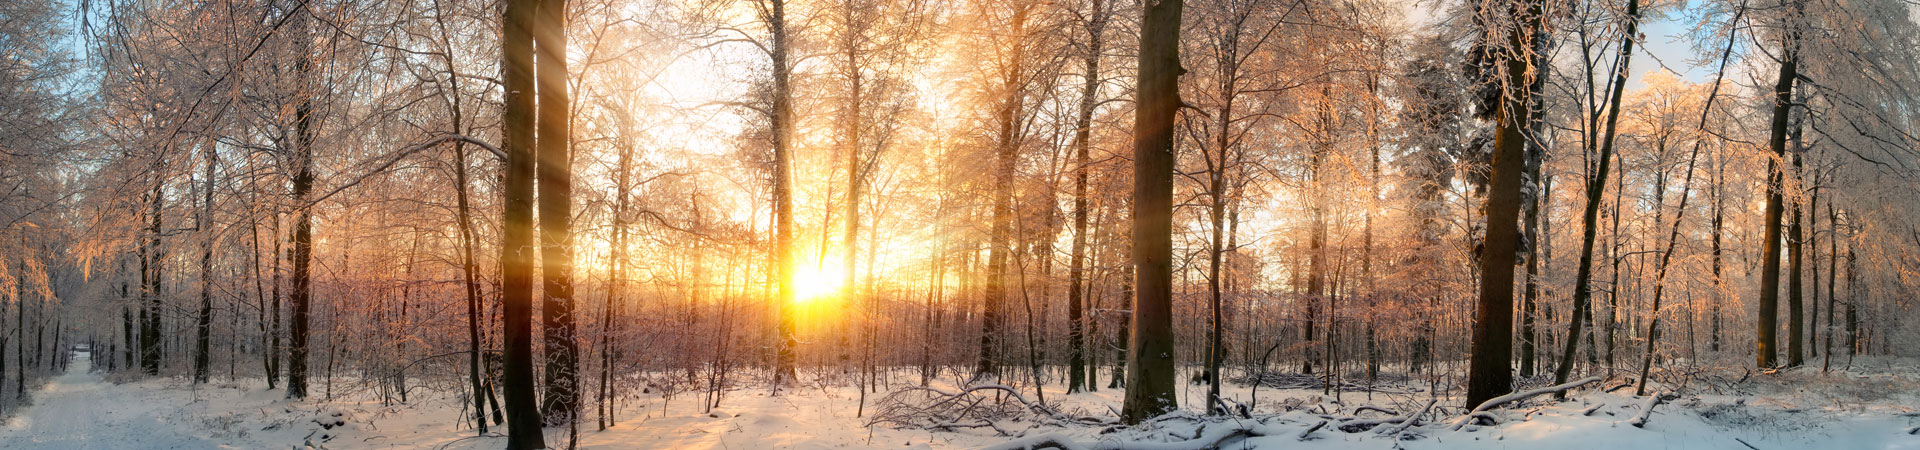 wintery forest scene